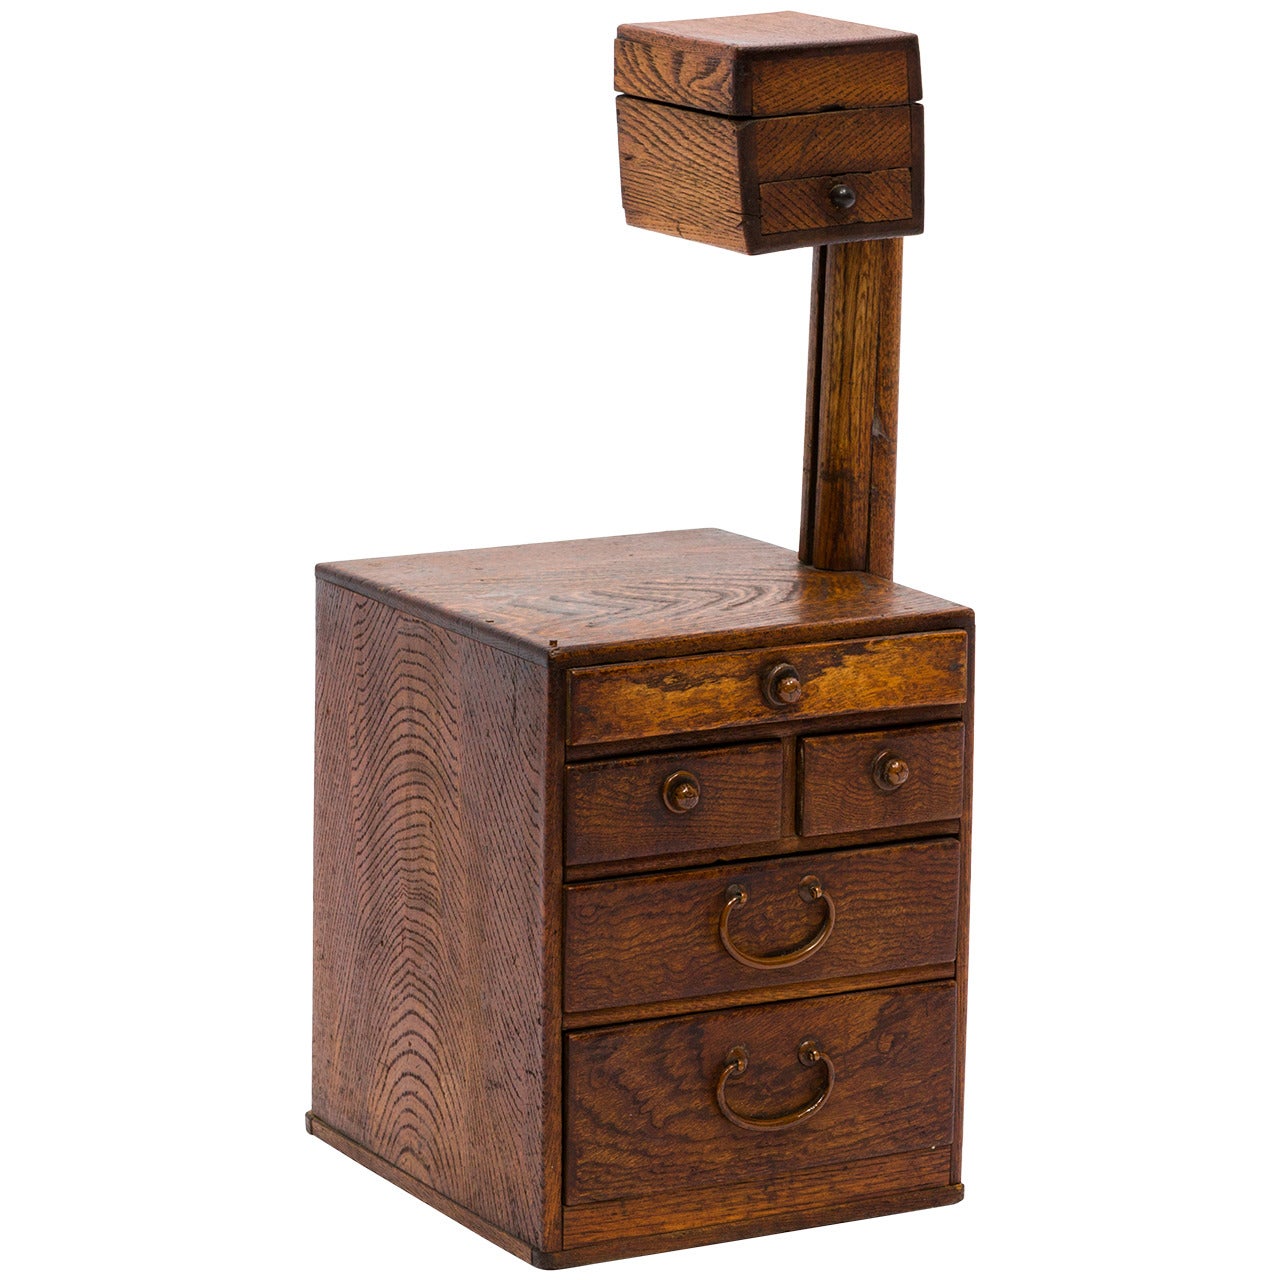 Antique Japanese Wood Trinket/Sewing Box